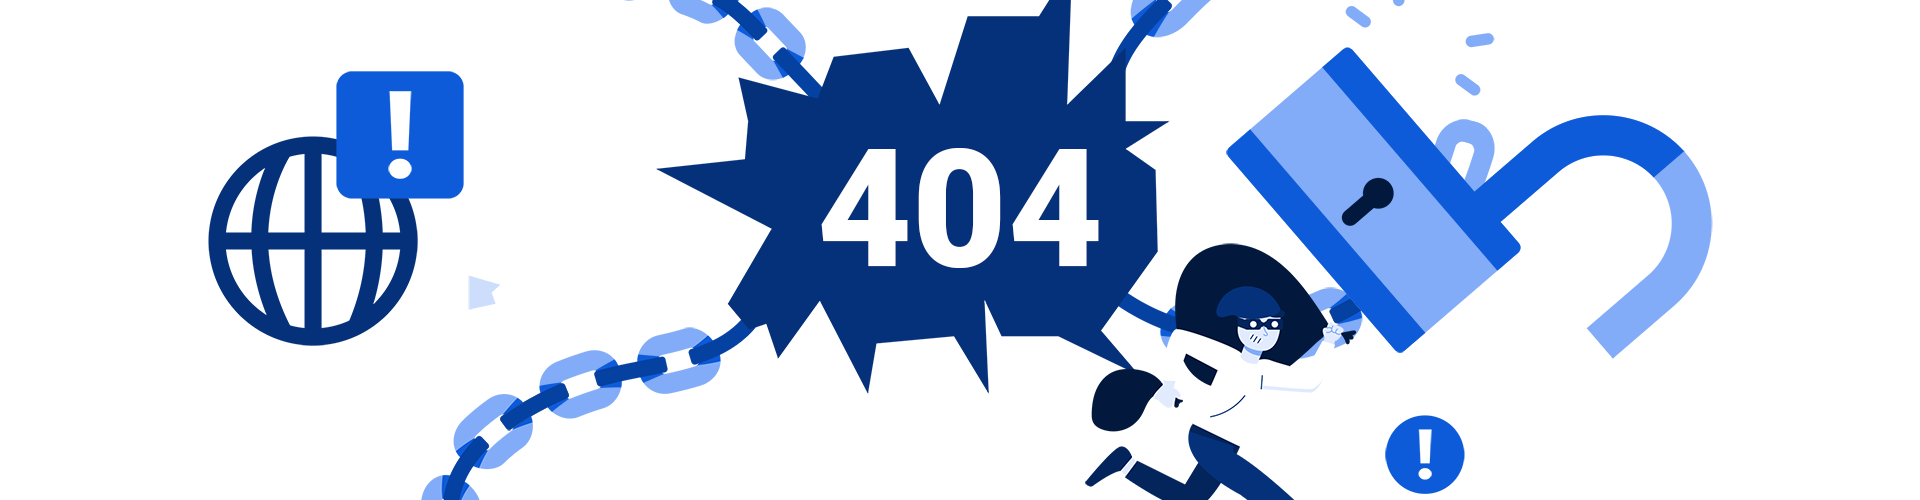 404 escape room schagen